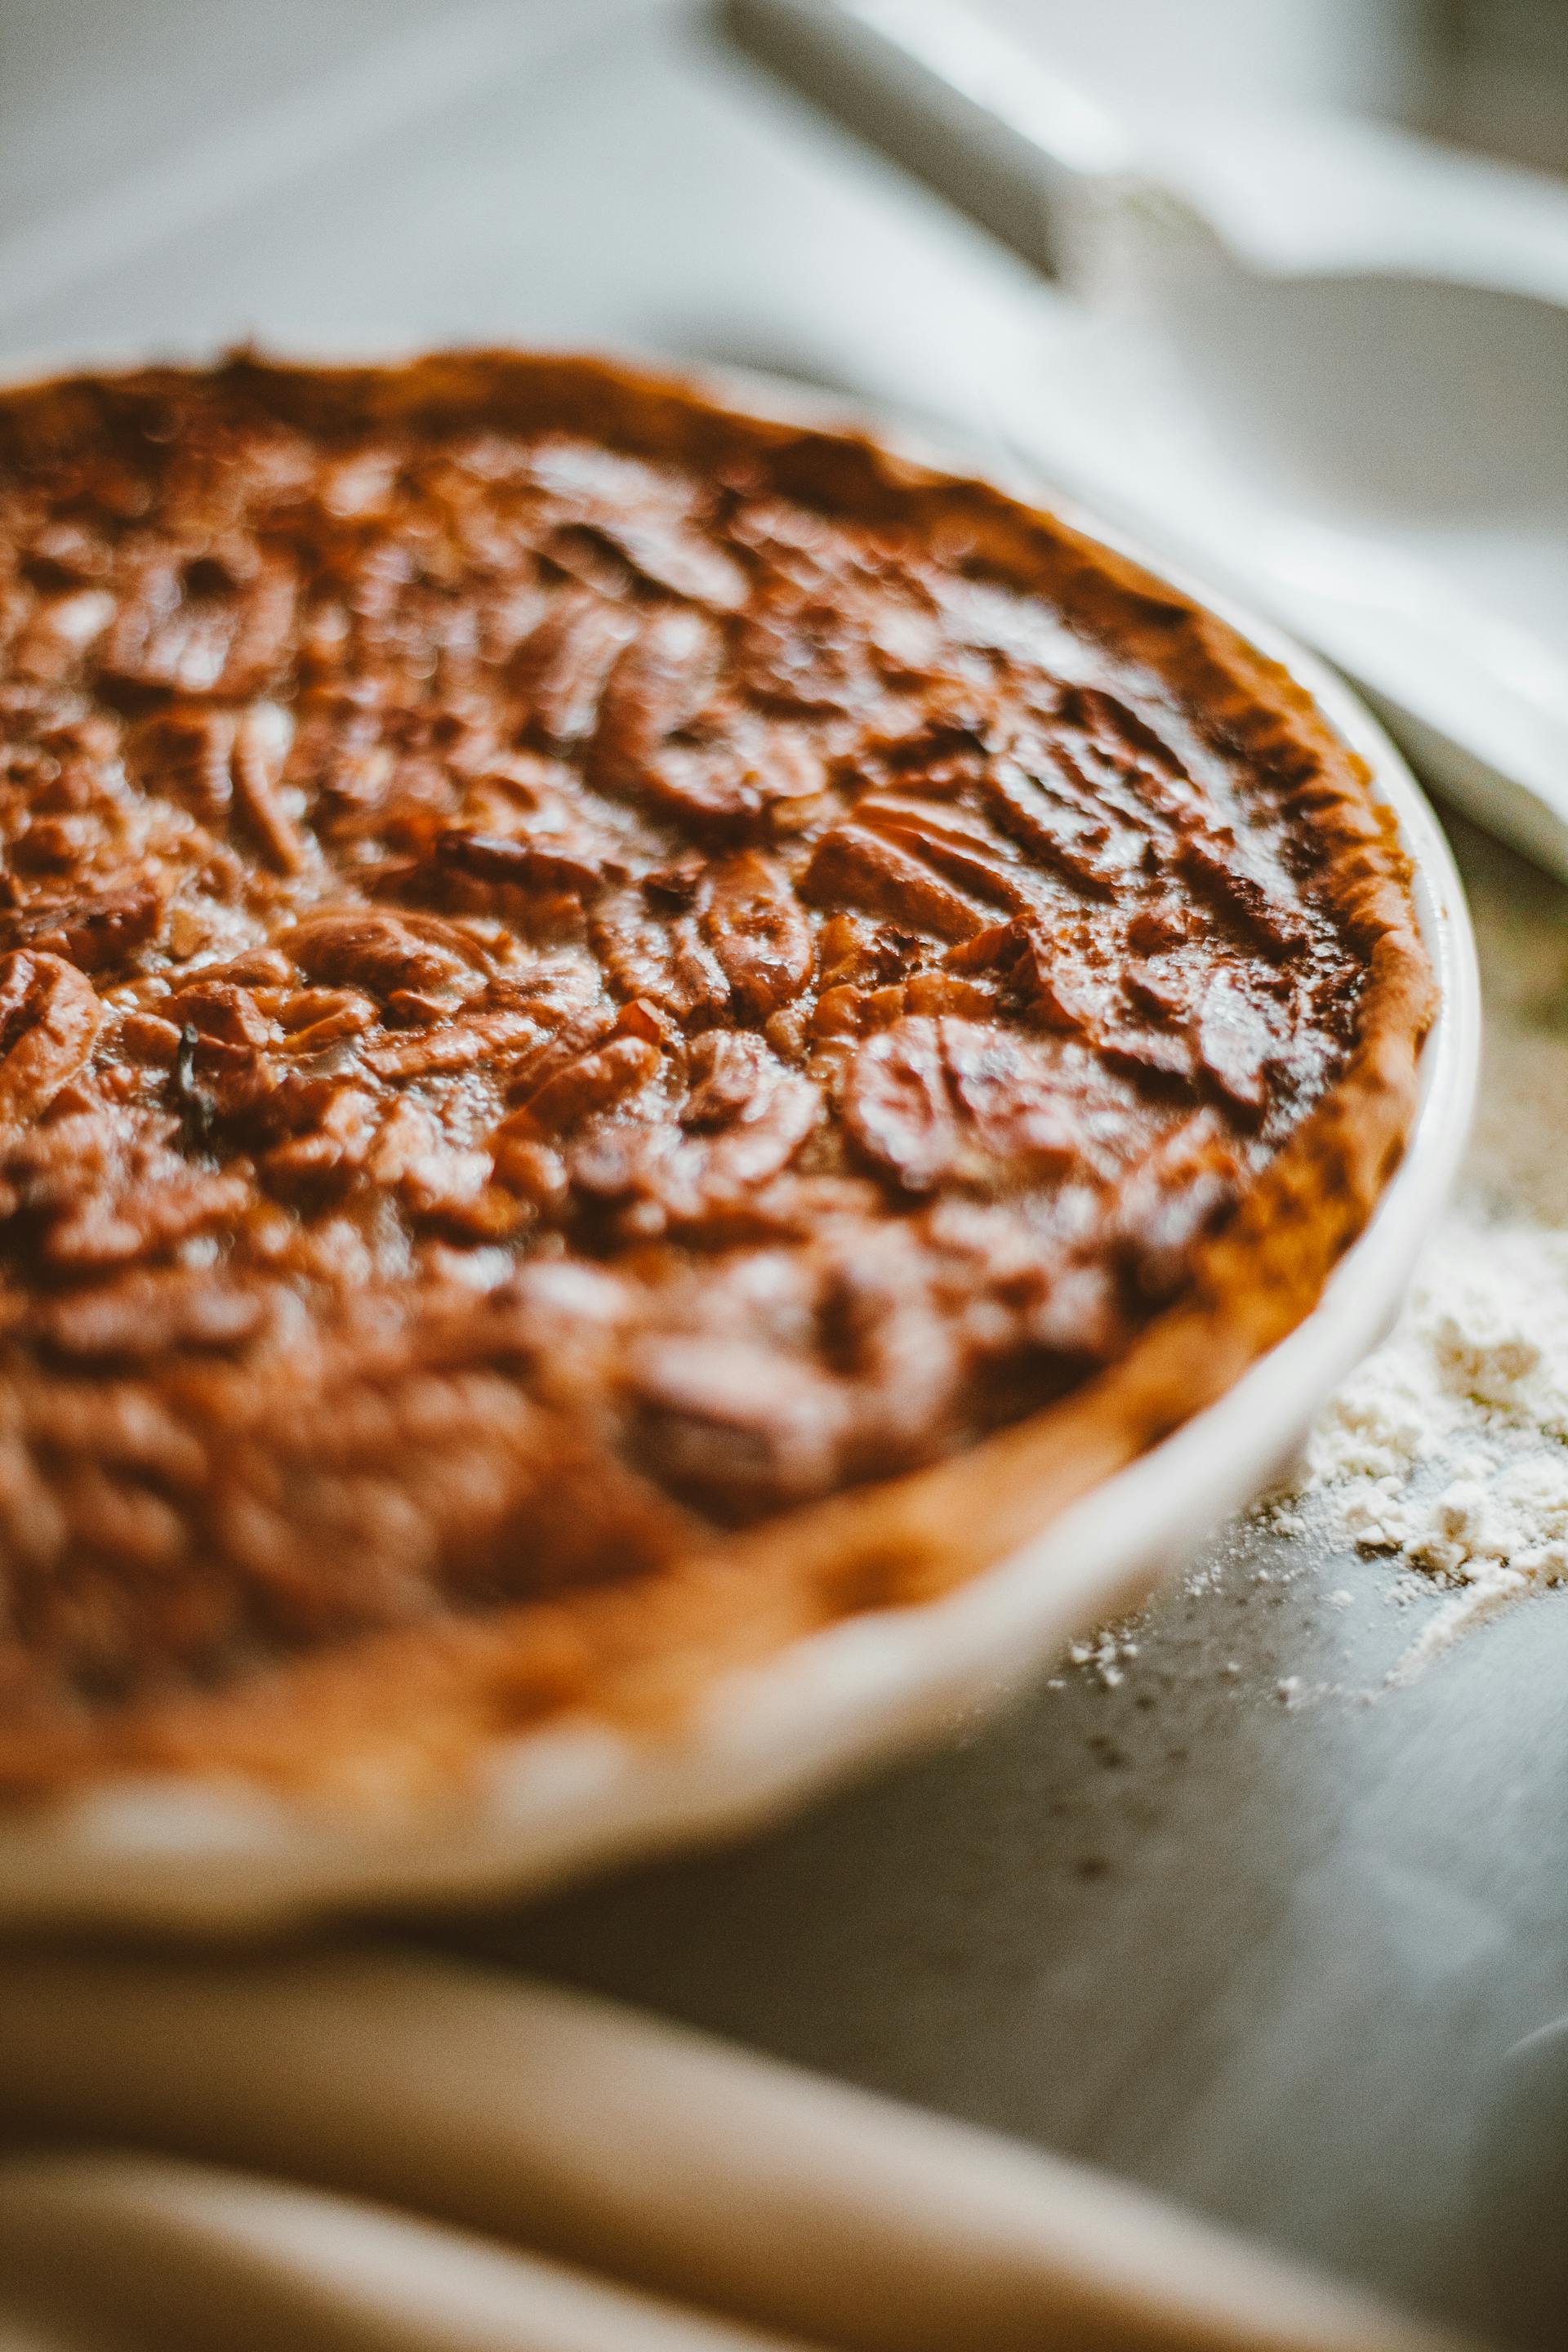 A close-up of a pecan pie | Source: Pexels